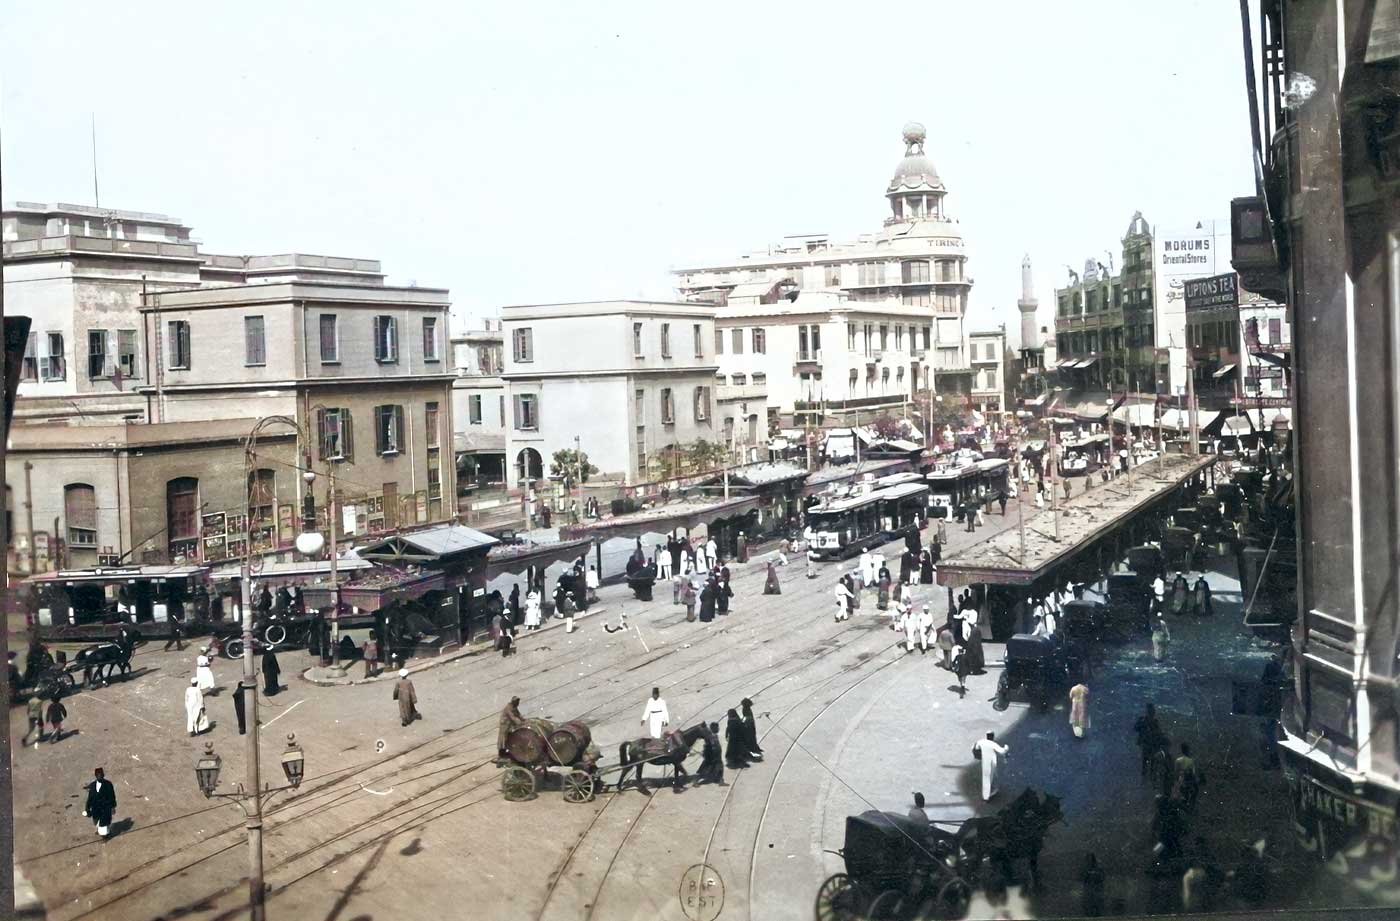 Cairo City Old Photo (1900s)